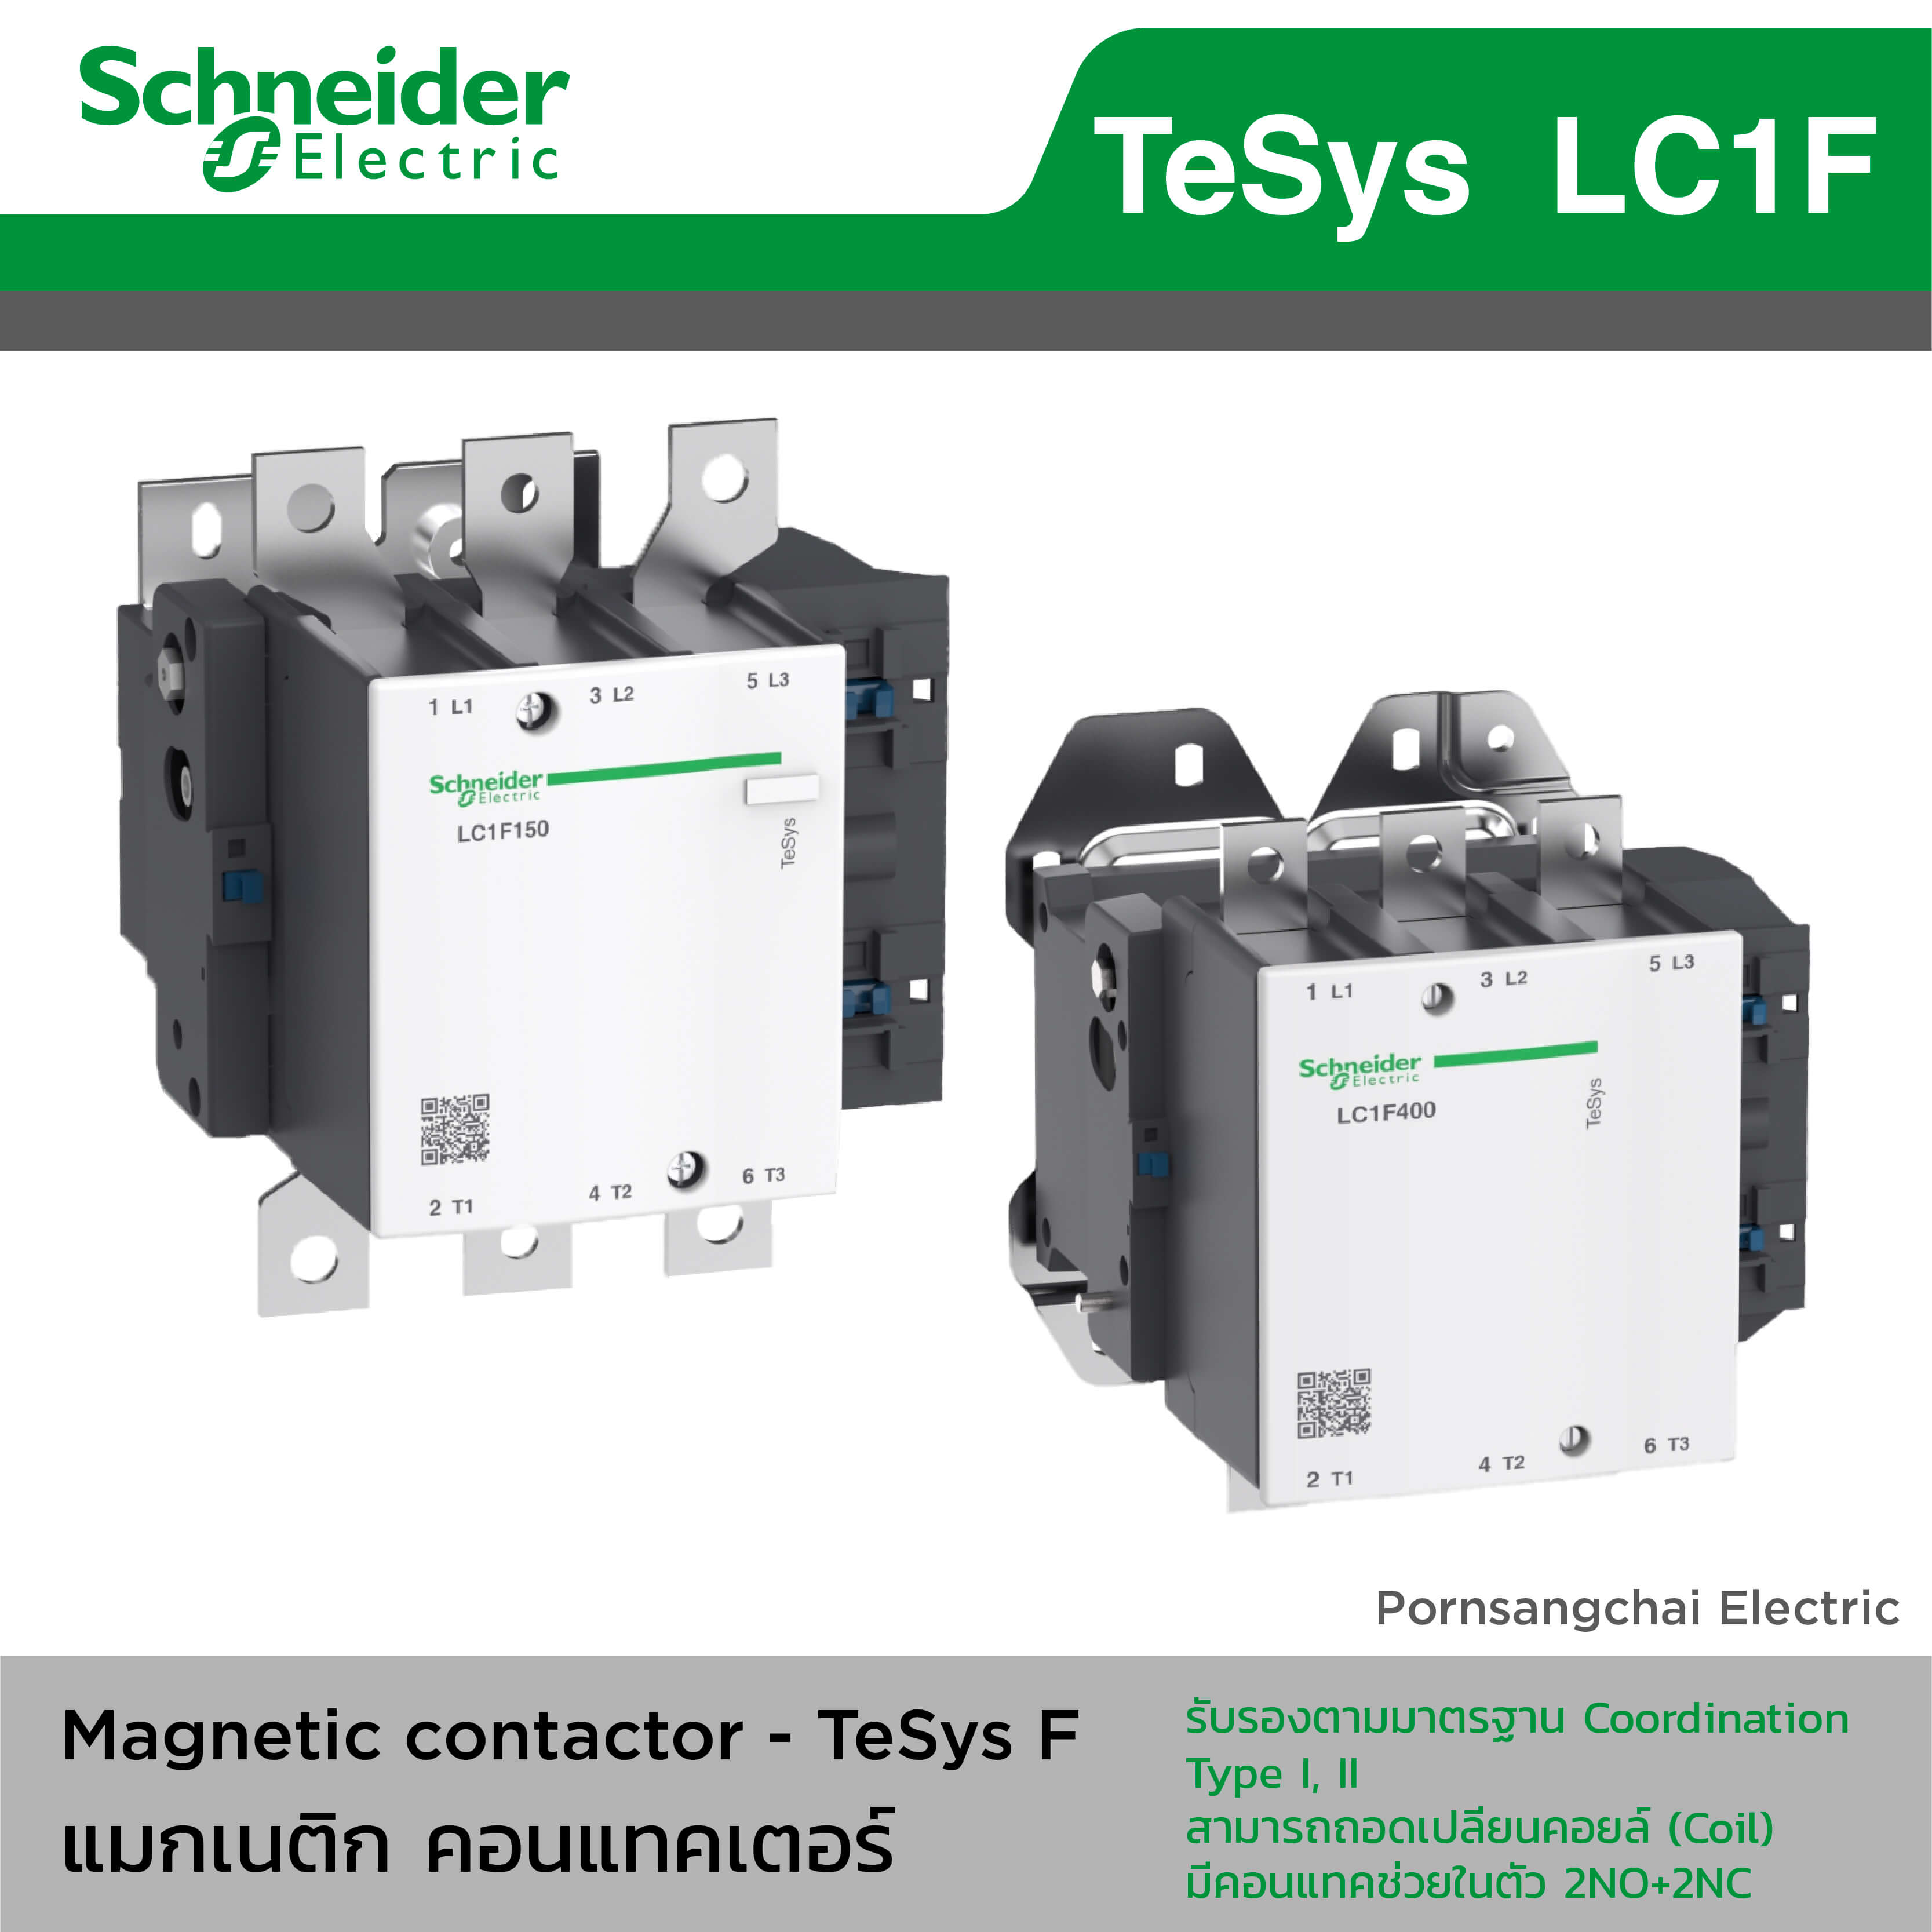 Schneider Magnetic Contactor แมกเนติก - Tesys F (Lc1F) | ร้านไฟฟ้า พรแสงชัย  ขายอุปกรณ์ไฟฟ้า ราคาถูก เป็นมิตร ครบวงจร โทร 02 214 3641 หรือ Line  @Pornsangchai